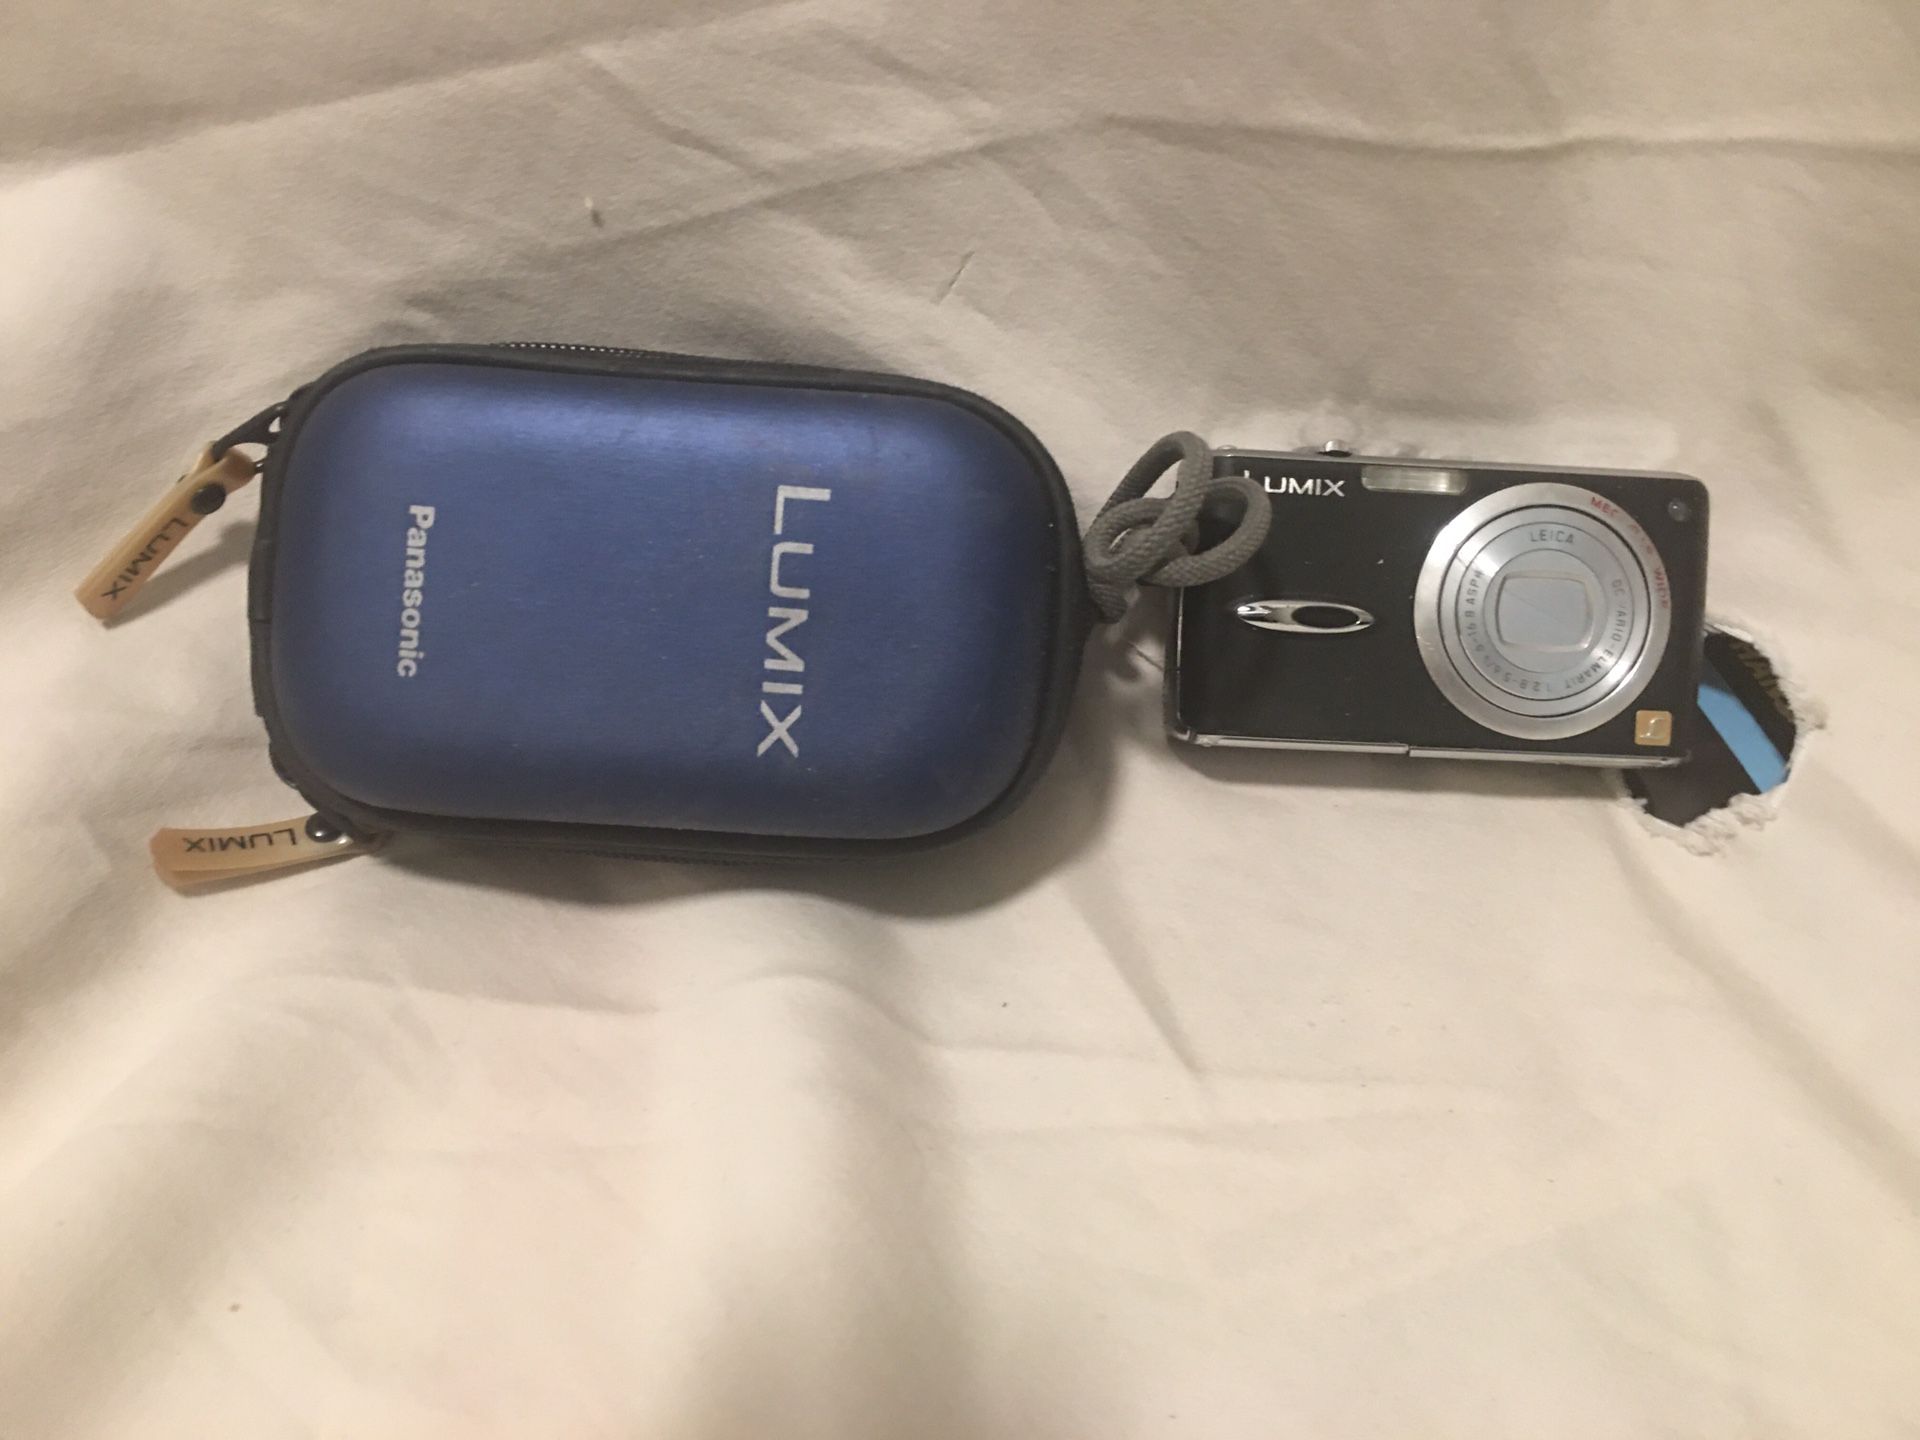 Panasonic LUMIX digital camera